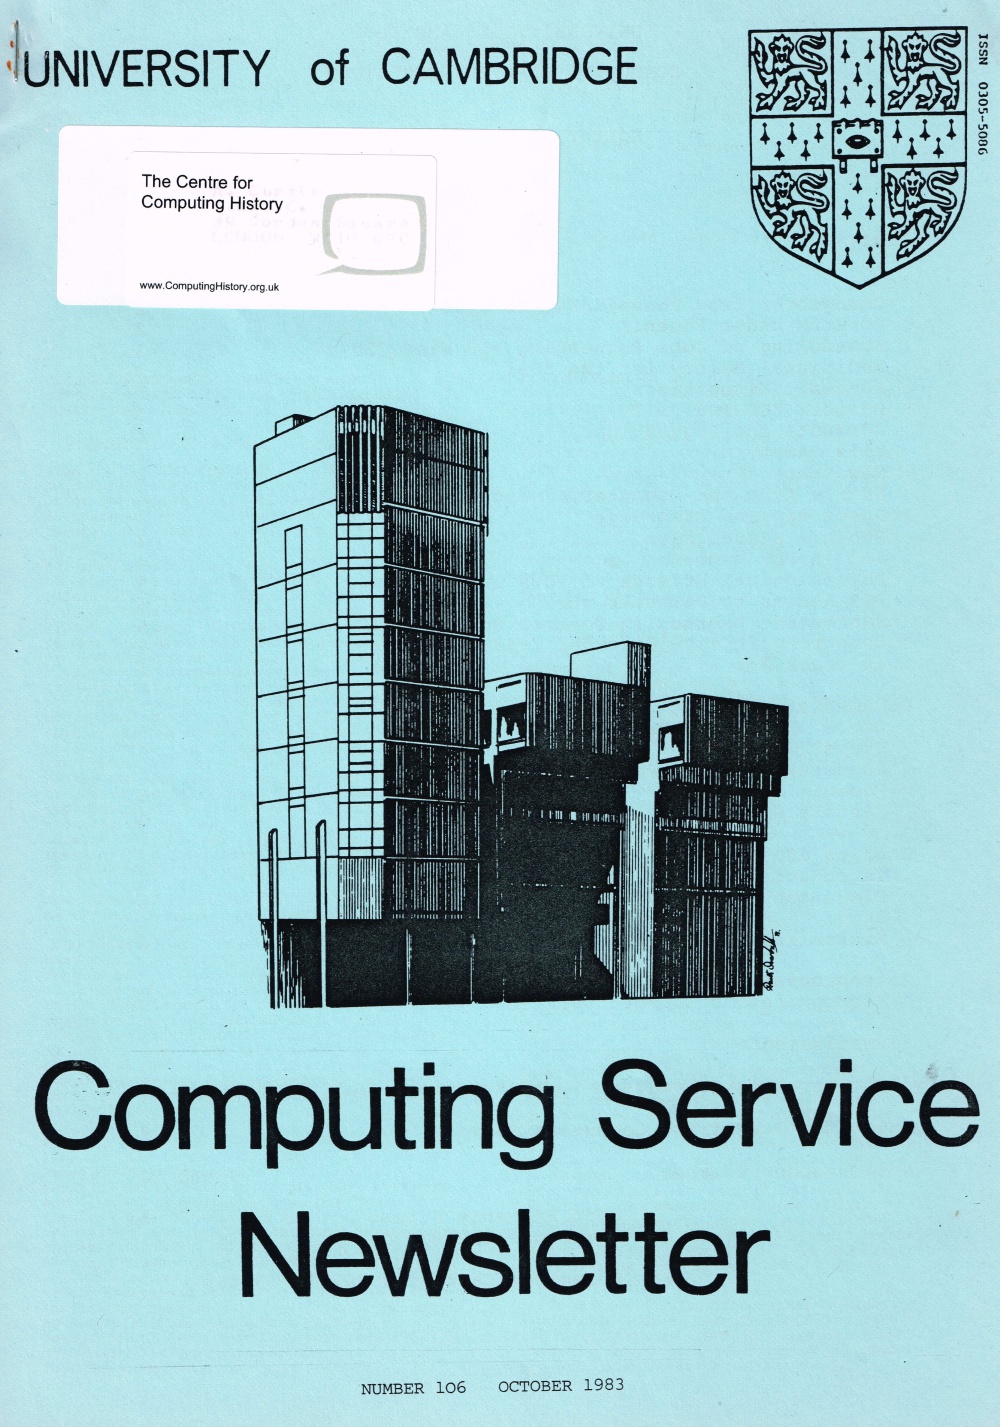 Article: University of Cambridge Computing Service October 1983 Newsletter 106